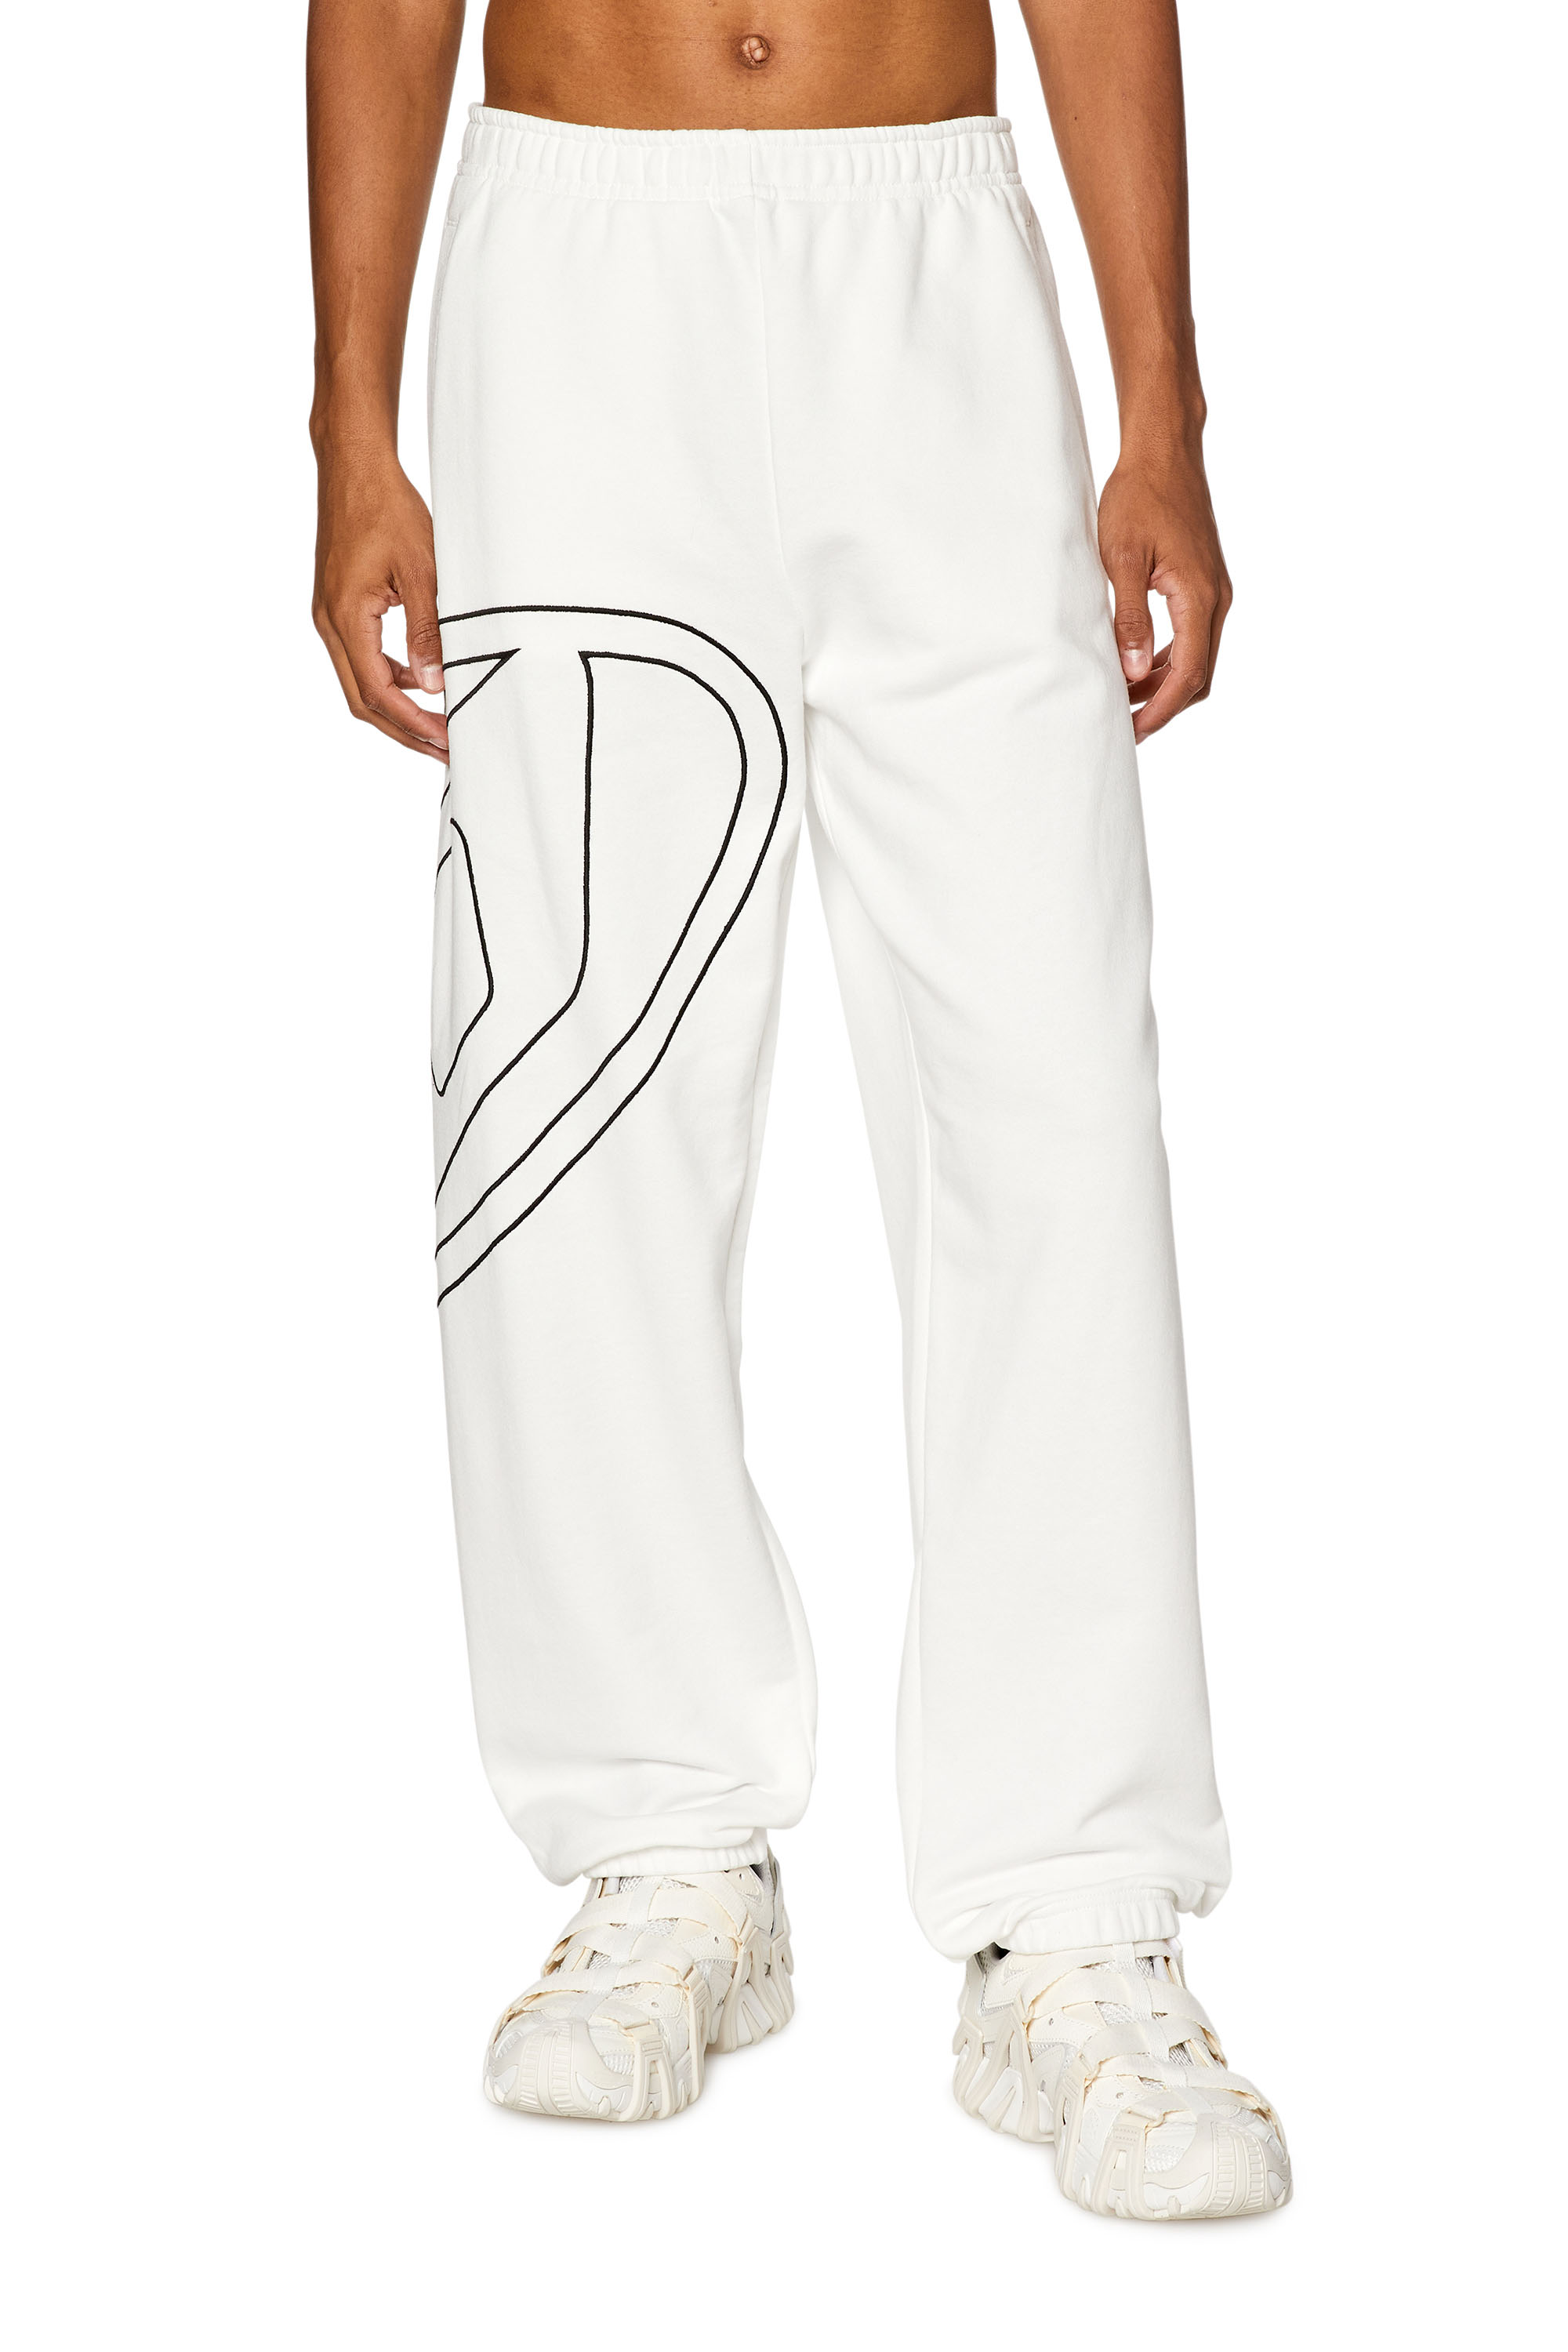 Diesel - Pantaloni sportivi con maxi logo oval D - Pantaloni - Uomo - Bianco